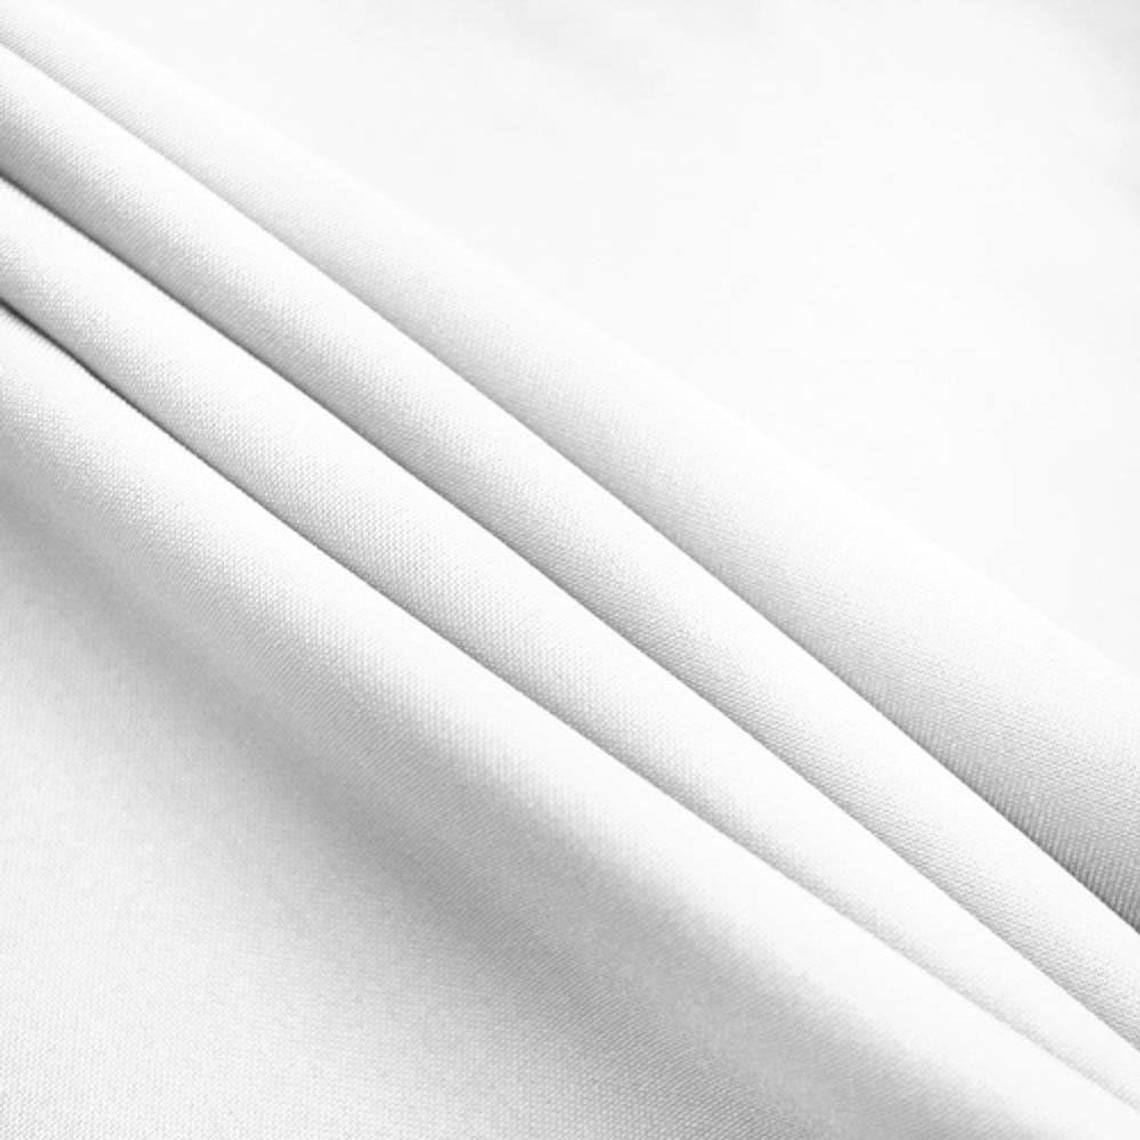 Wholesale Poly Poplin Fabric WhiteICE FABRICSICE FABRICSBy The Roll (60" Wide)Wholesale White Poly Poplin Fabric ICE FABRICS